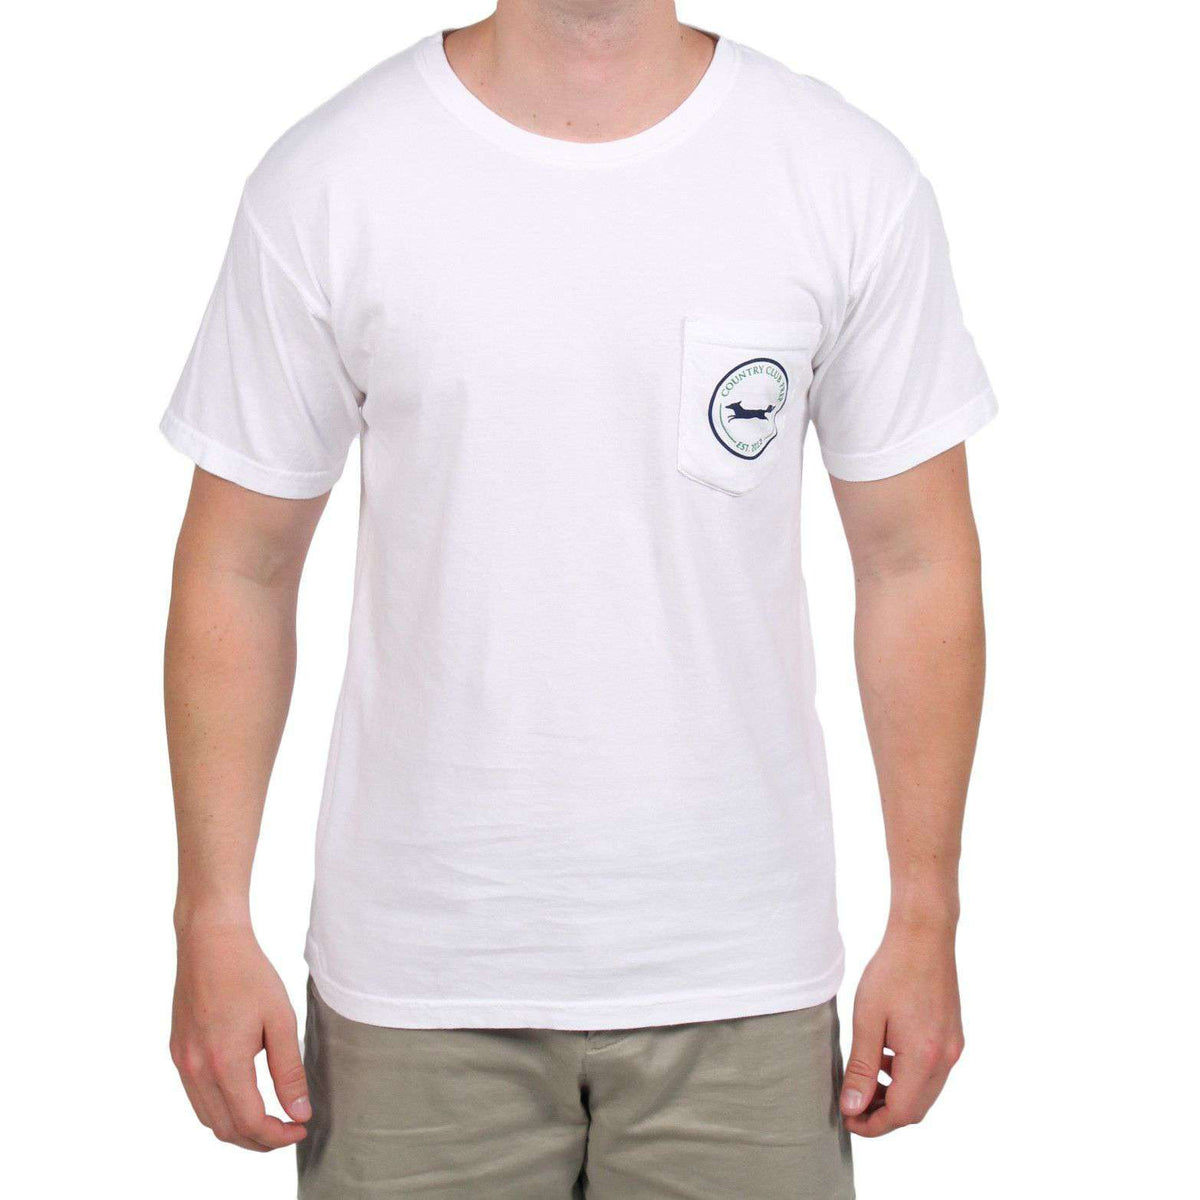 19th Hole Longshanks Logo Tee Shirt in White by Country Club Prep - Country Club Prep